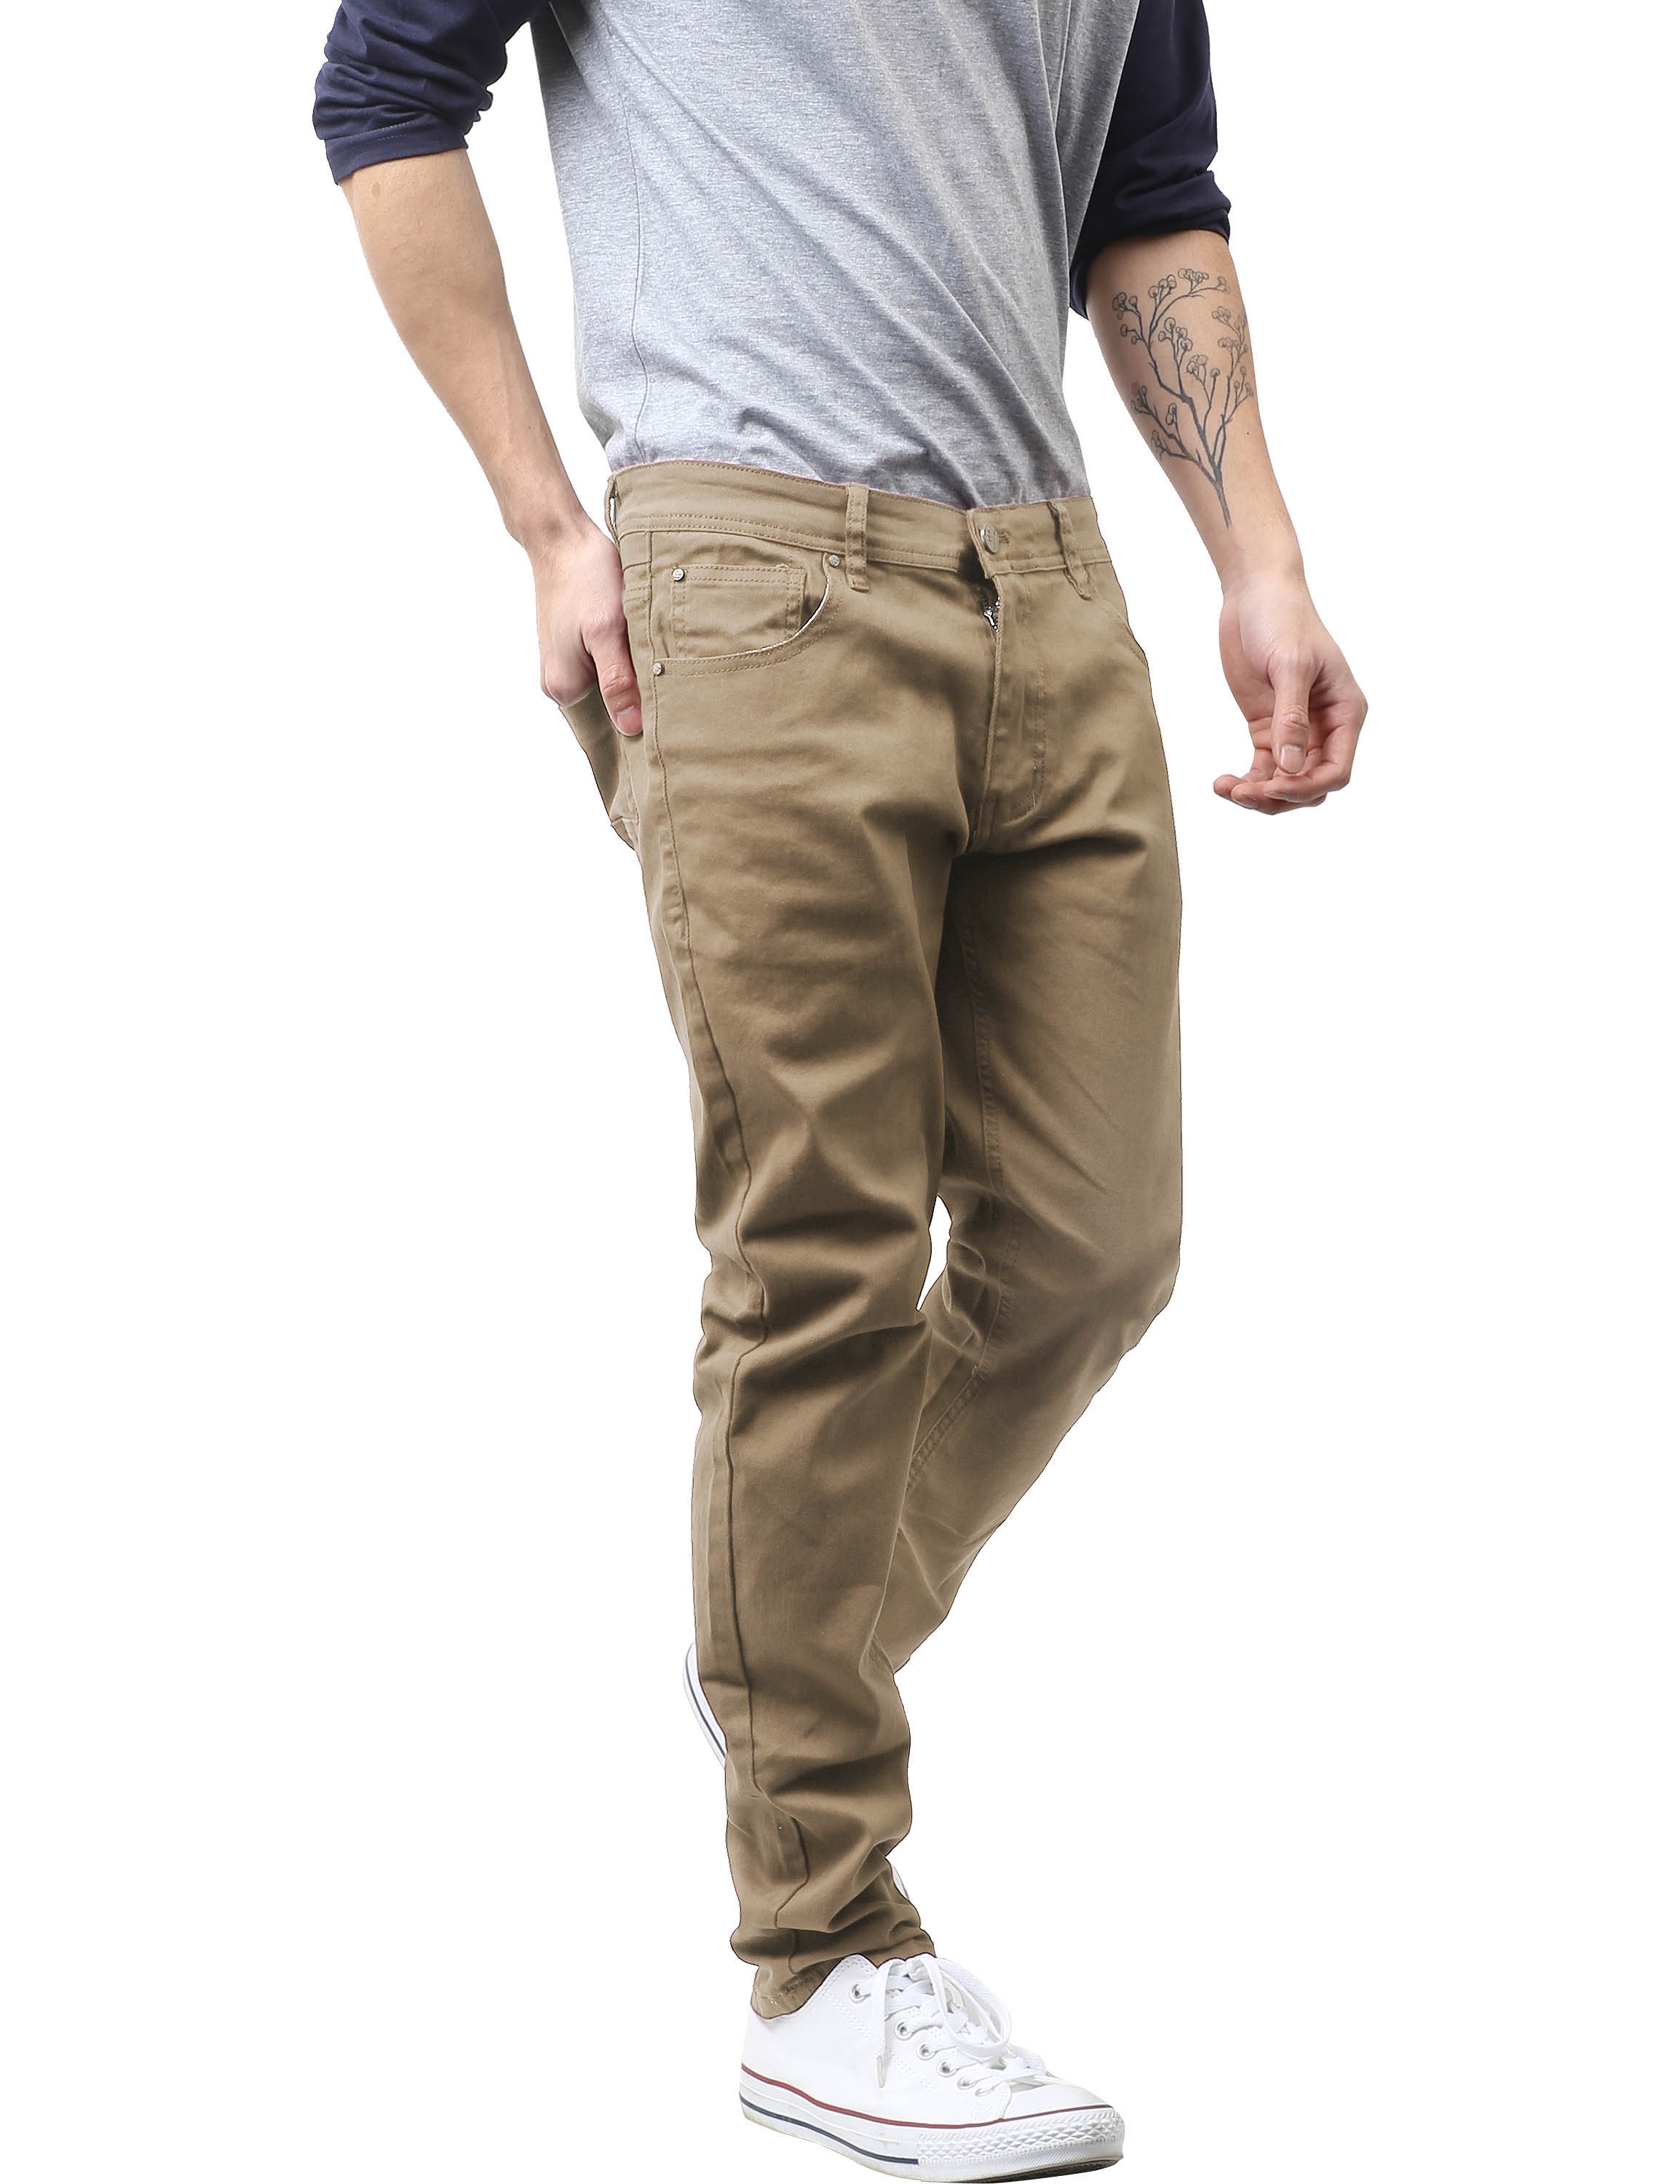 Ma Croix Mens Skinny Jeans Stretch Skinny Fit Slim Denim Pants - image 2 of 6